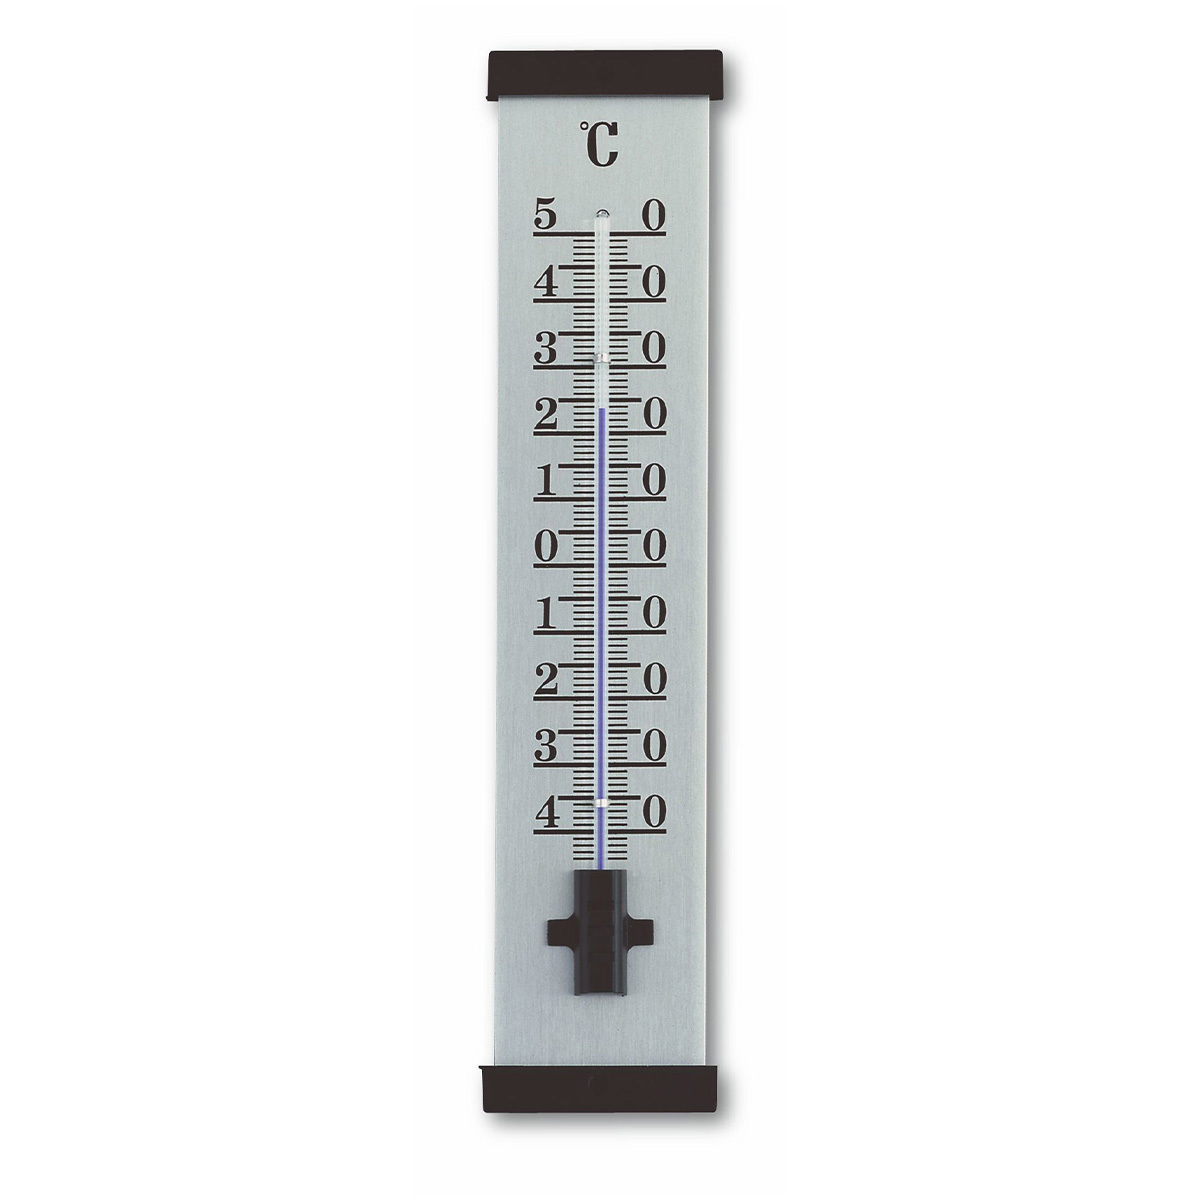 12-2006-analoges-innen-aussen-thermometer-alumimium-1200x1200px.jpg